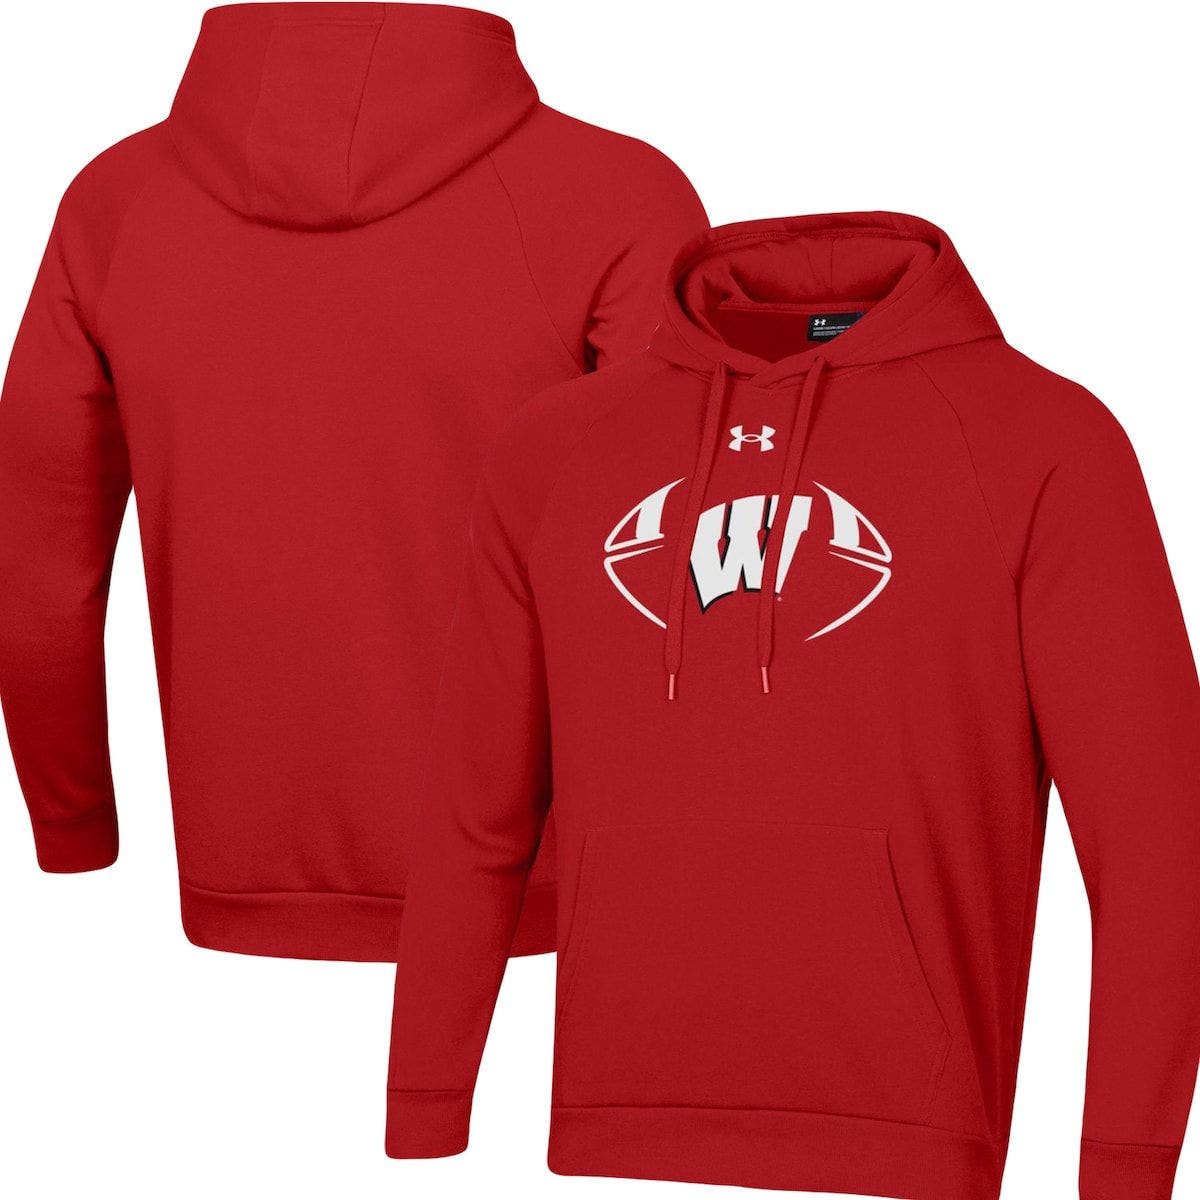 Medium Red Under Armour Adult NCAA Mens Fleece Hood